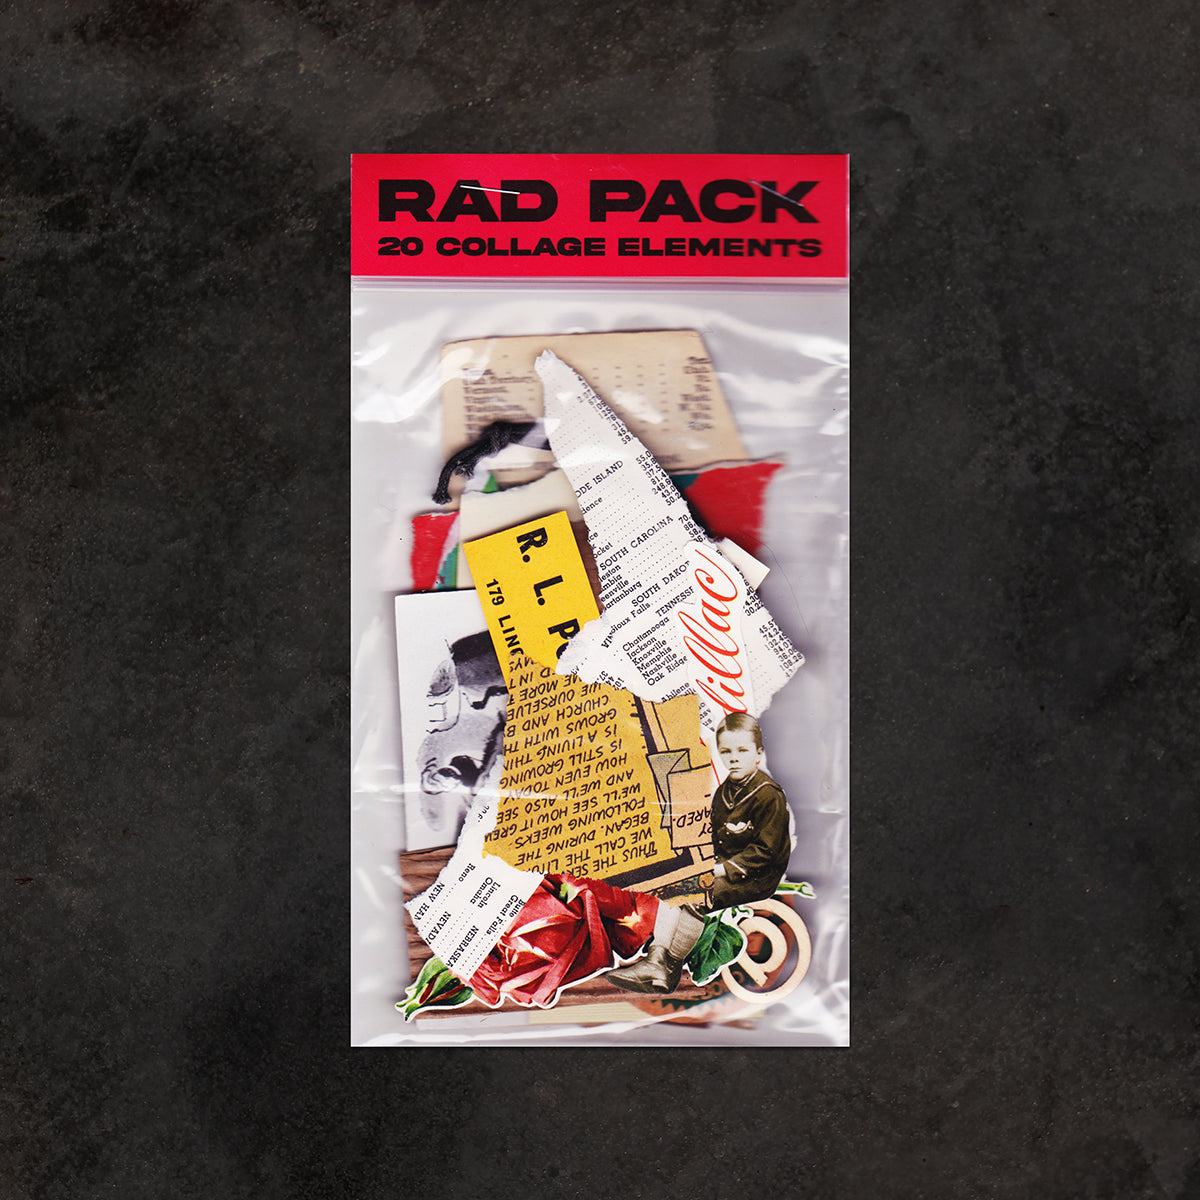 RAD PACK 04 - Rad Future